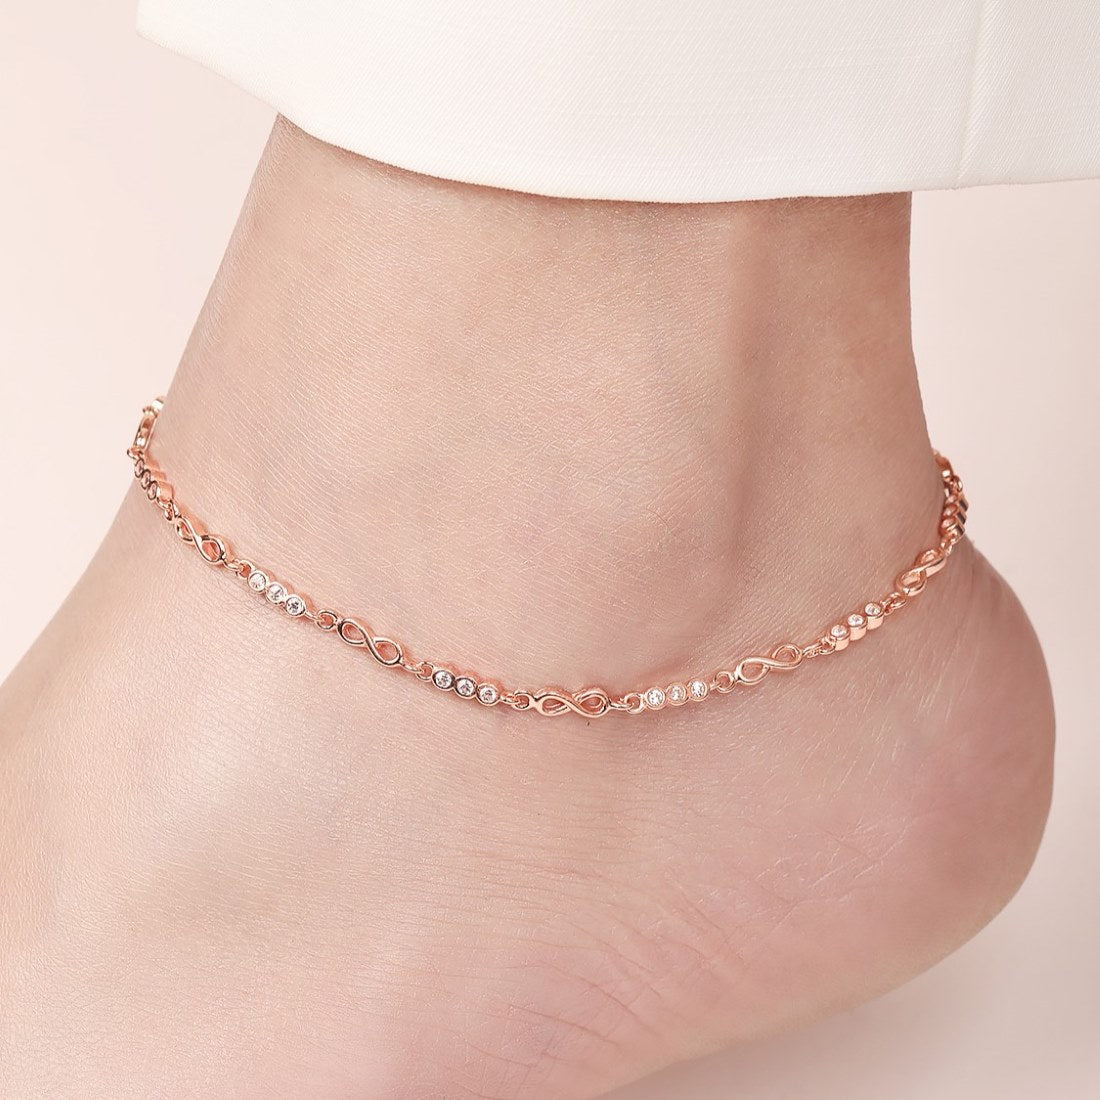 Infinite Sparkle Rose Gold-Plated 925 Sterling Silver Anklet